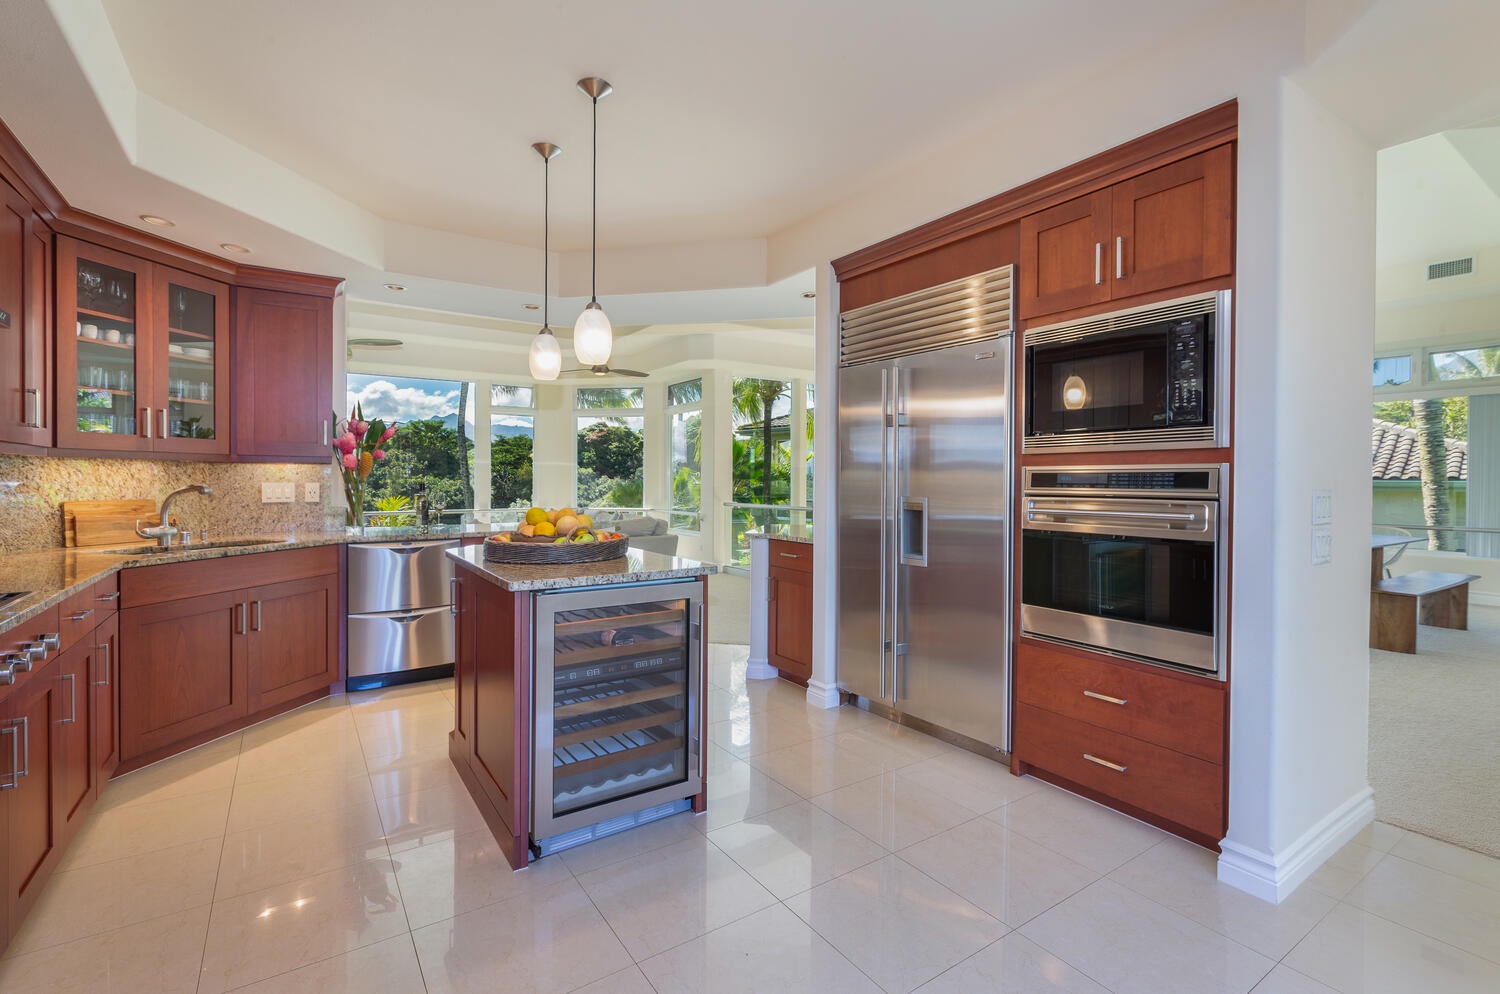 Princeville Vacation Rentals, Kai Naia Hale - Chef's kitchen with Wolfe gas range and Sub-Zero fridge